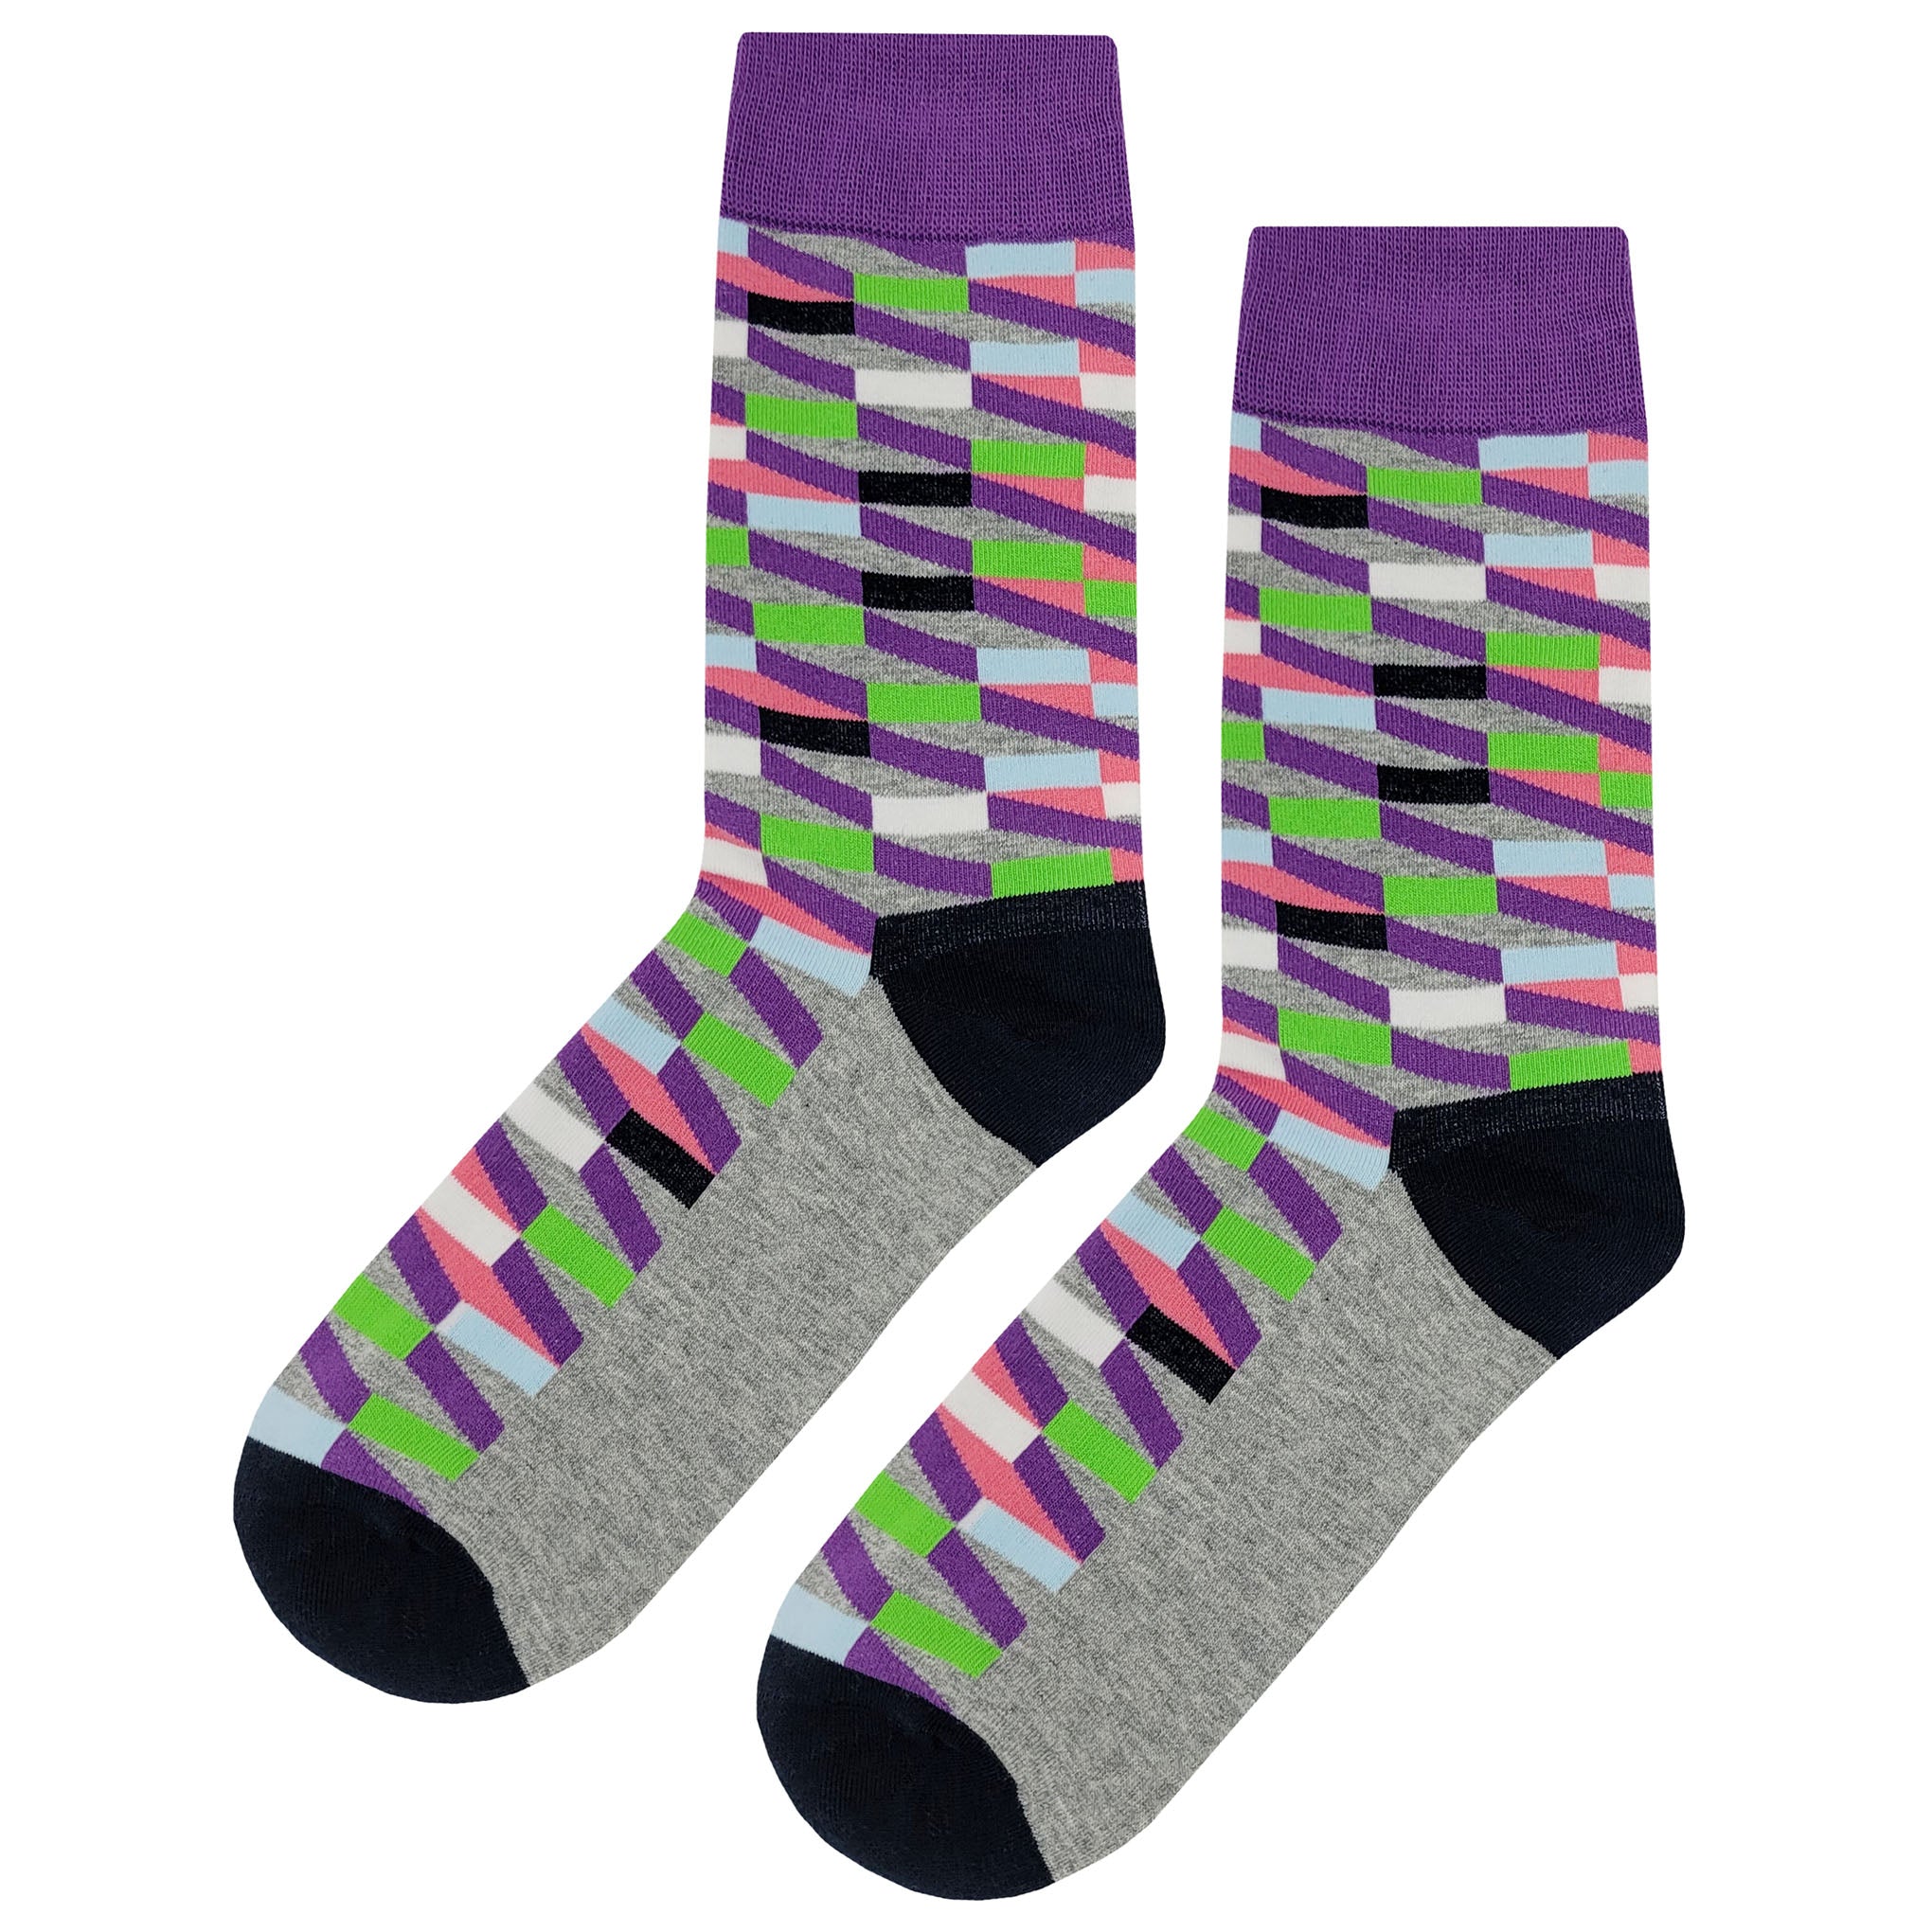 Purple Mix Socks - Fun and Crazy Socks at Sockfly.com